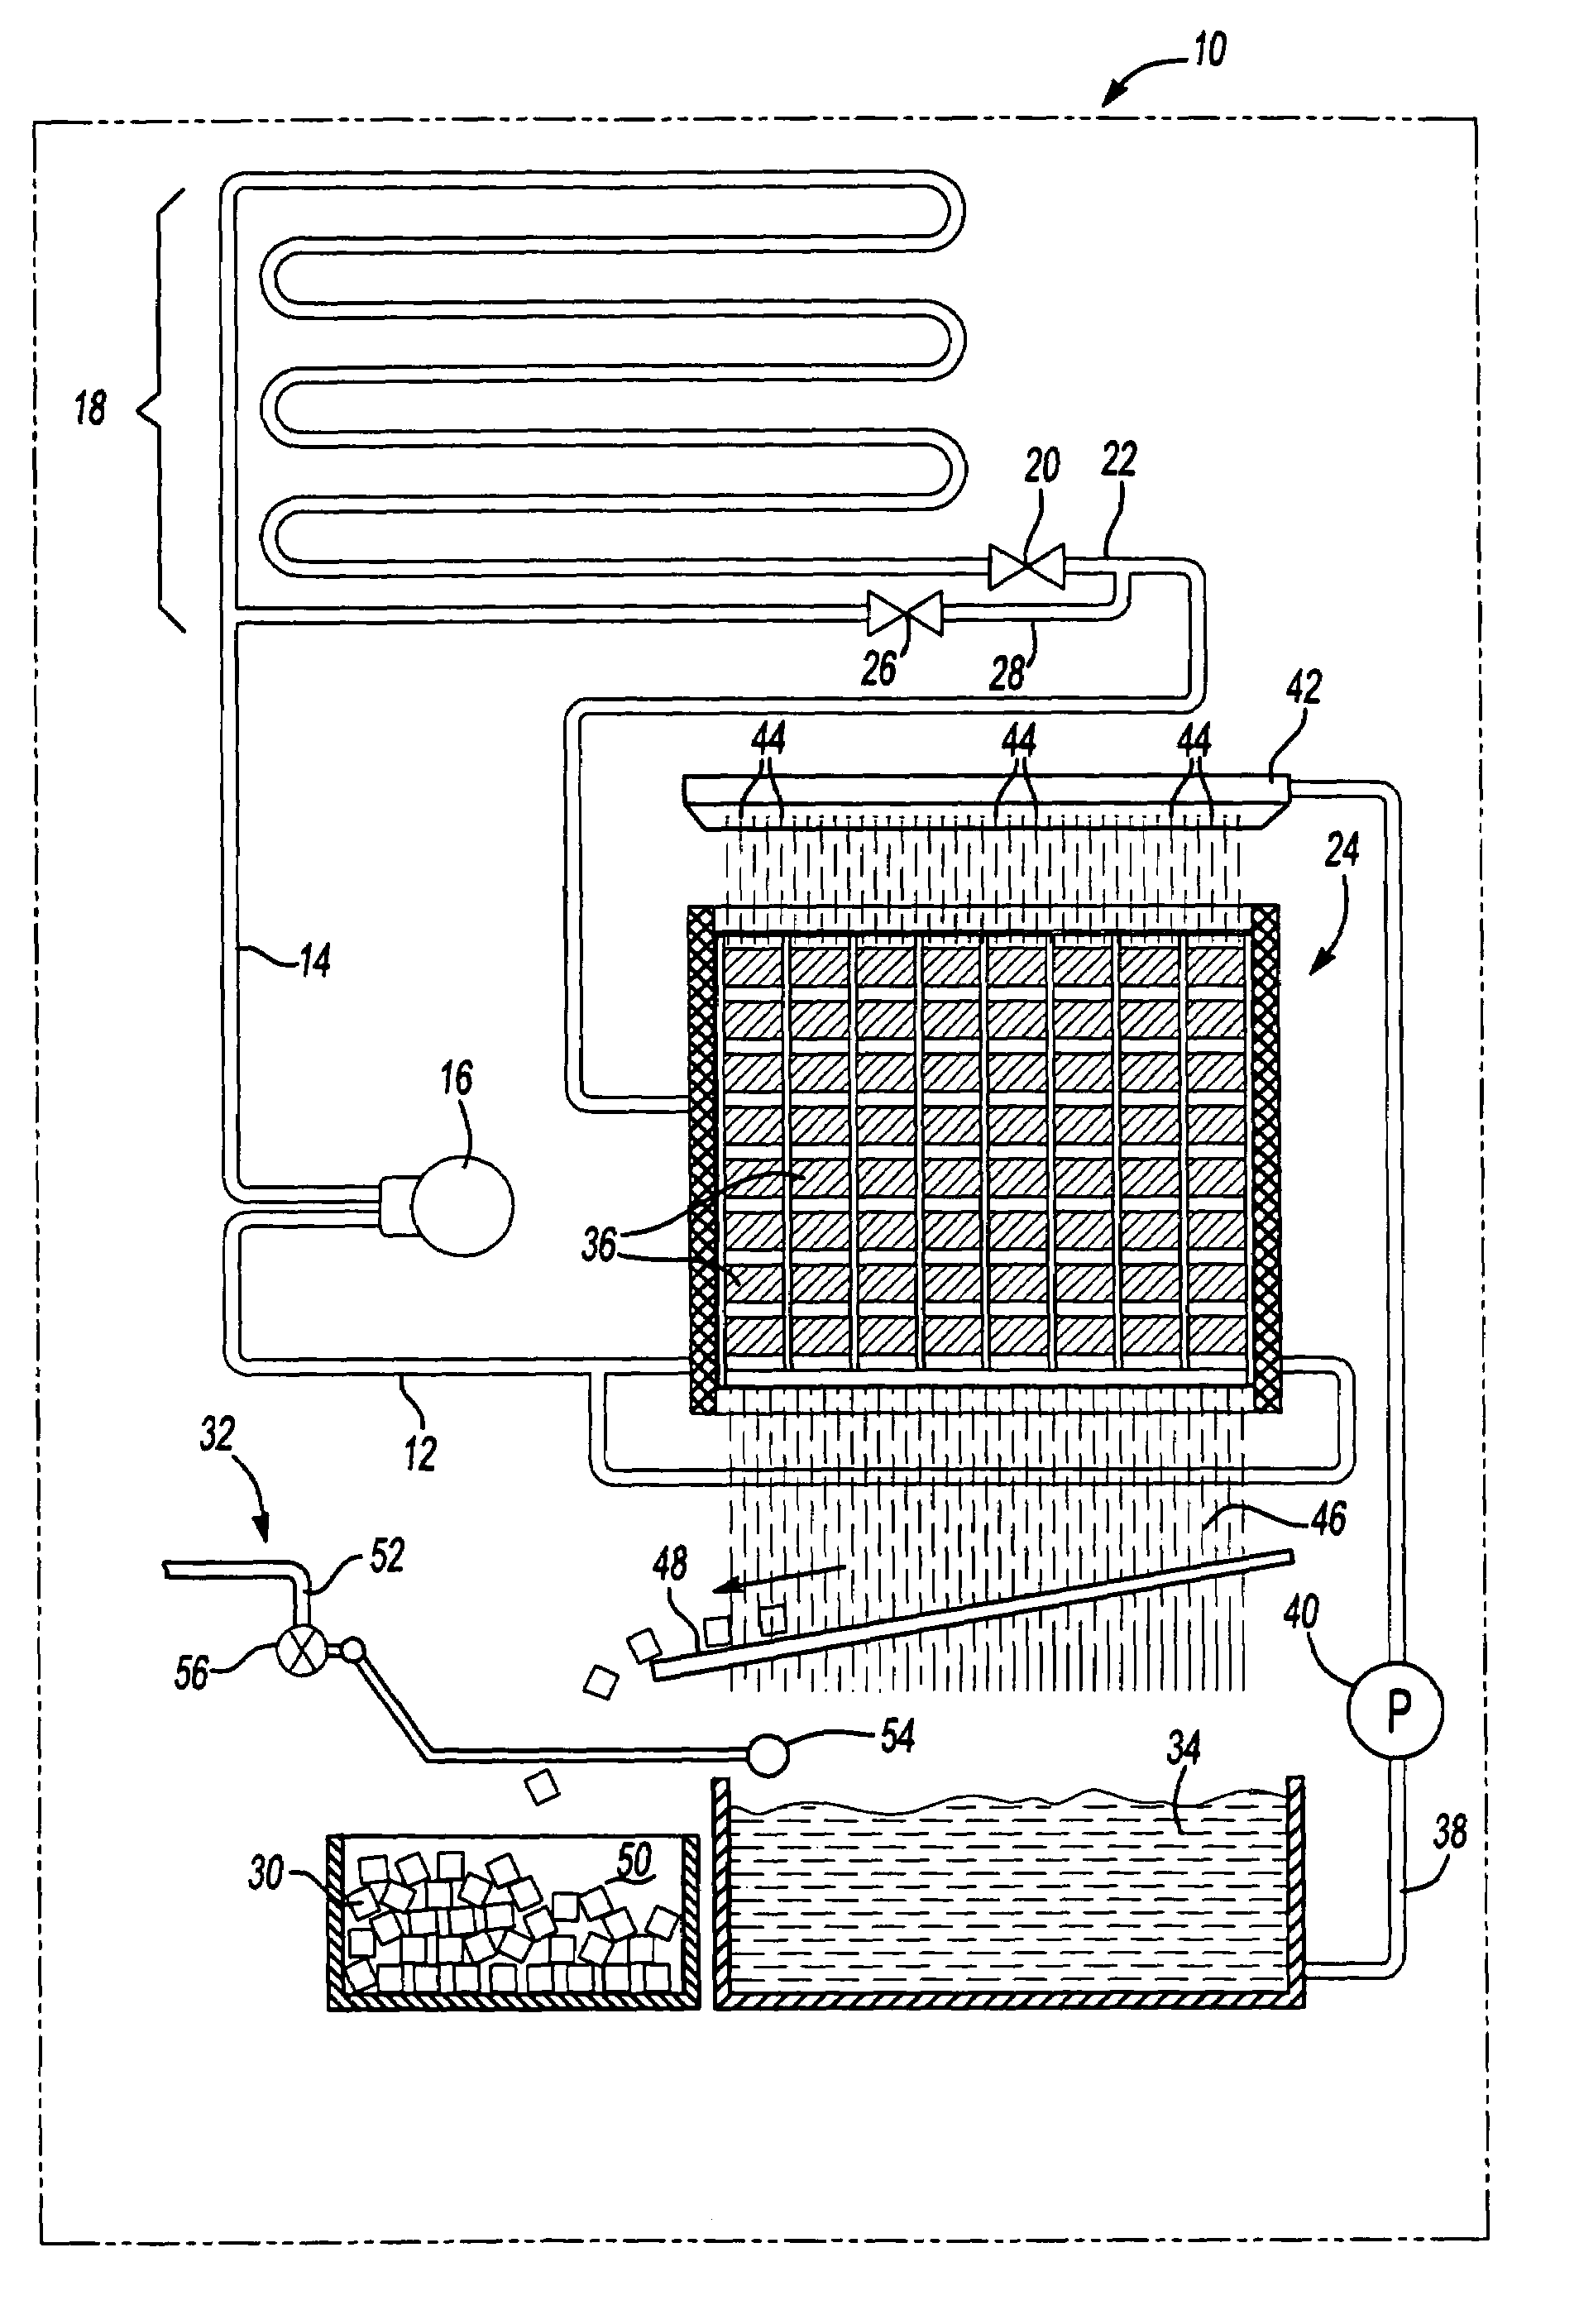 Micro-channel tubing evaporator